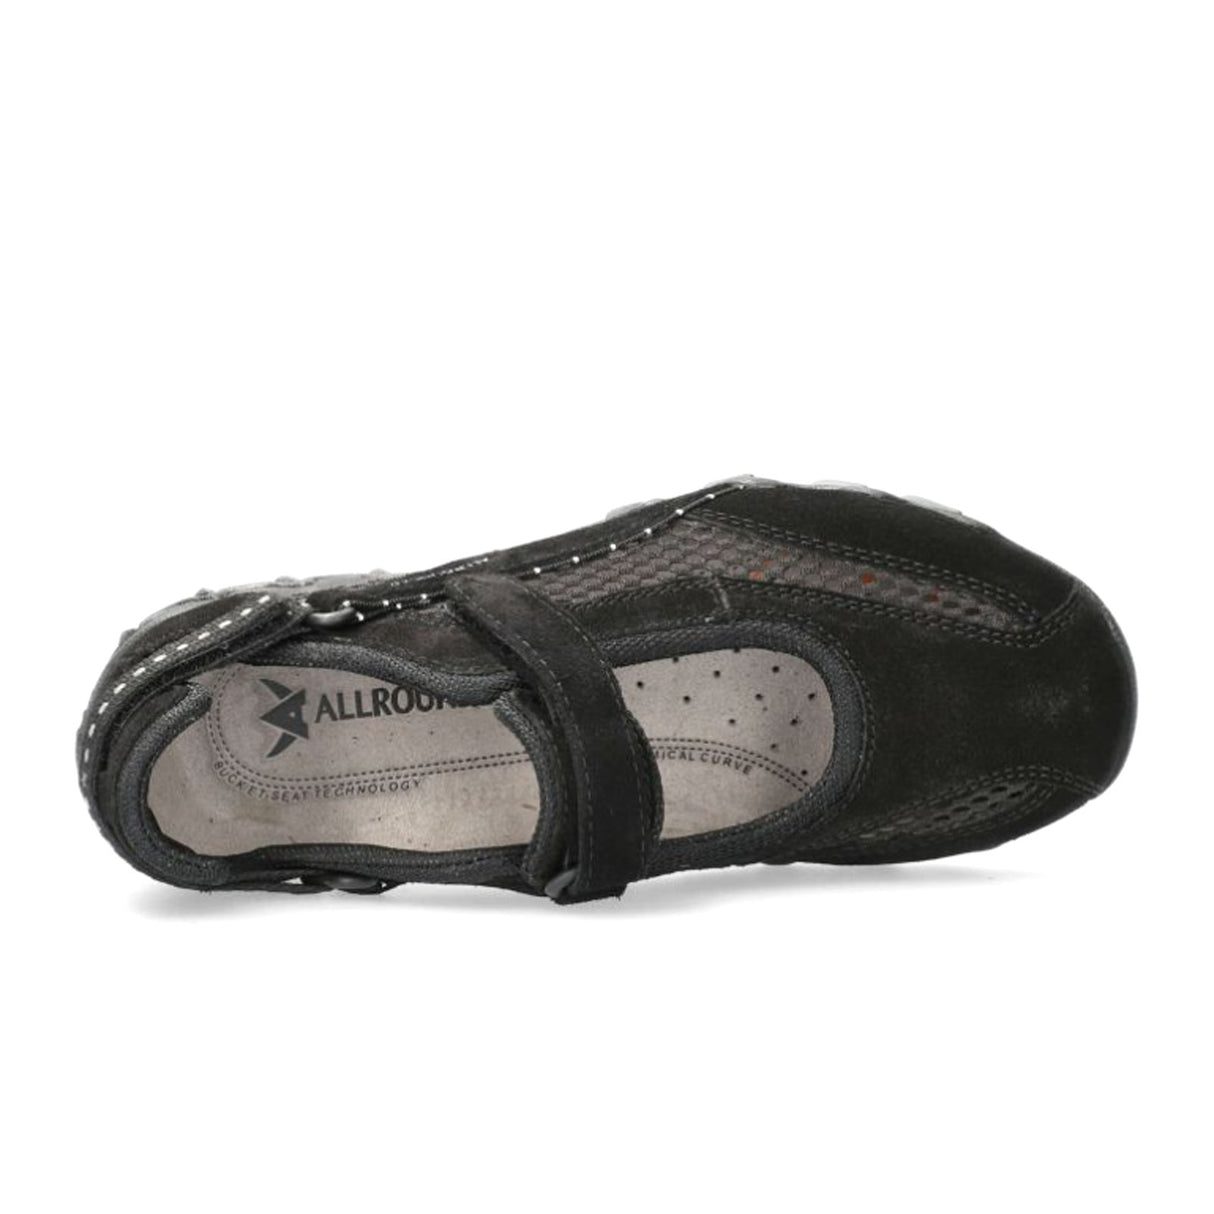 Allrounder Niro (Women) - Black/Black Suede Athletic - Walking - The Heel Shoe Fitters